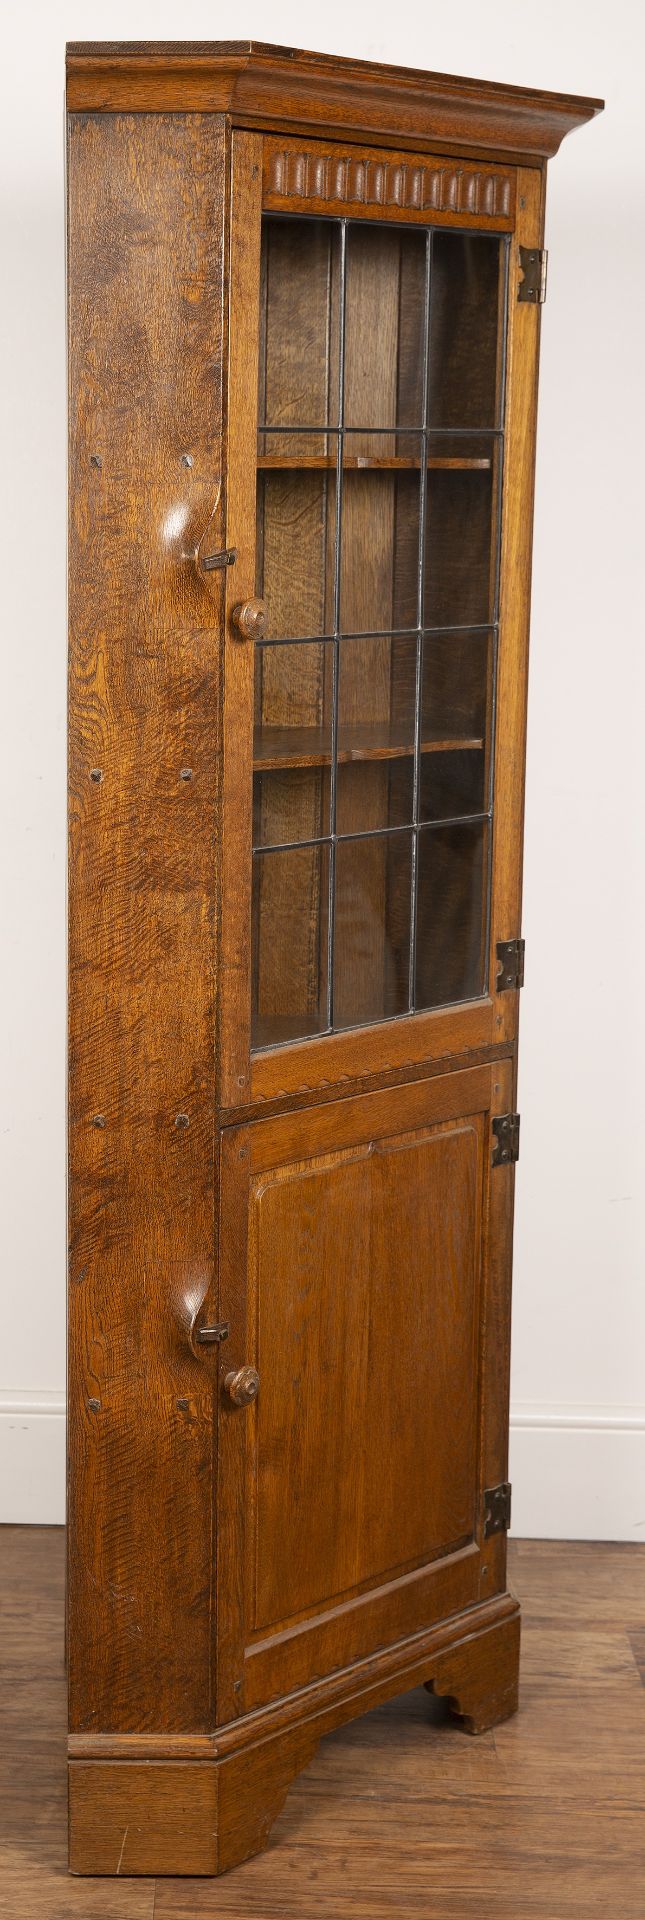 Yorkshire School oak, corner display cabinet, with astragal glazed door above a fielded panel - Image 3 of 5